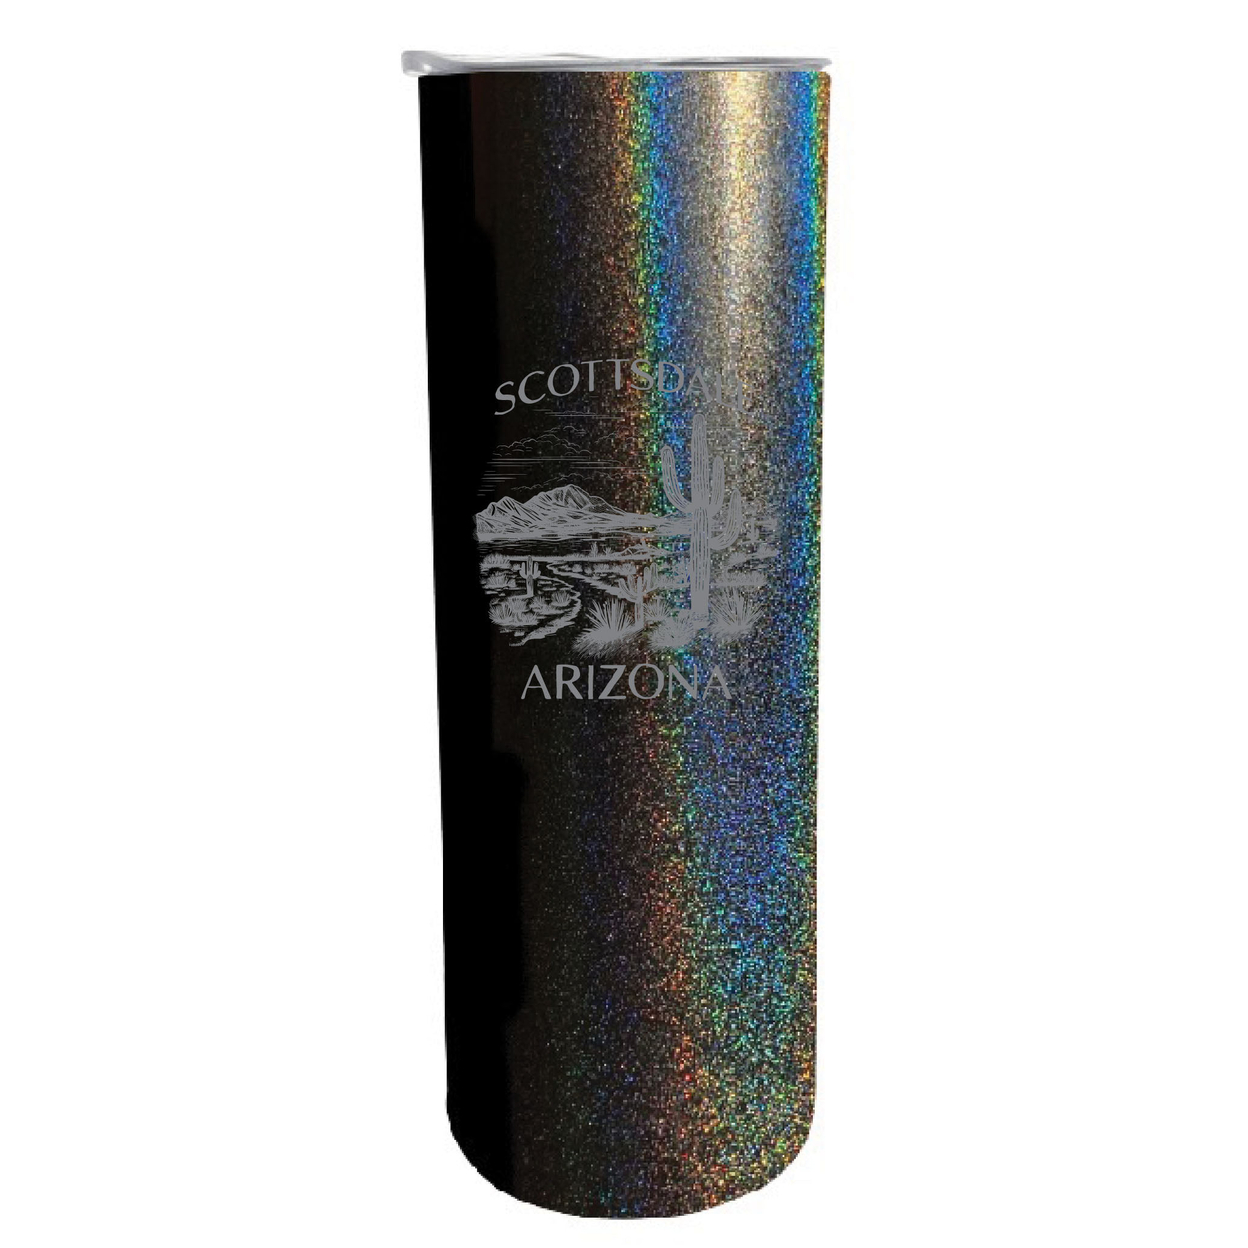 Scottsdale Arizona Souvenir 20 Oz Engraved Insulated Stainless Steel Skinny Tumbler - Black Glitter,,4-Pack